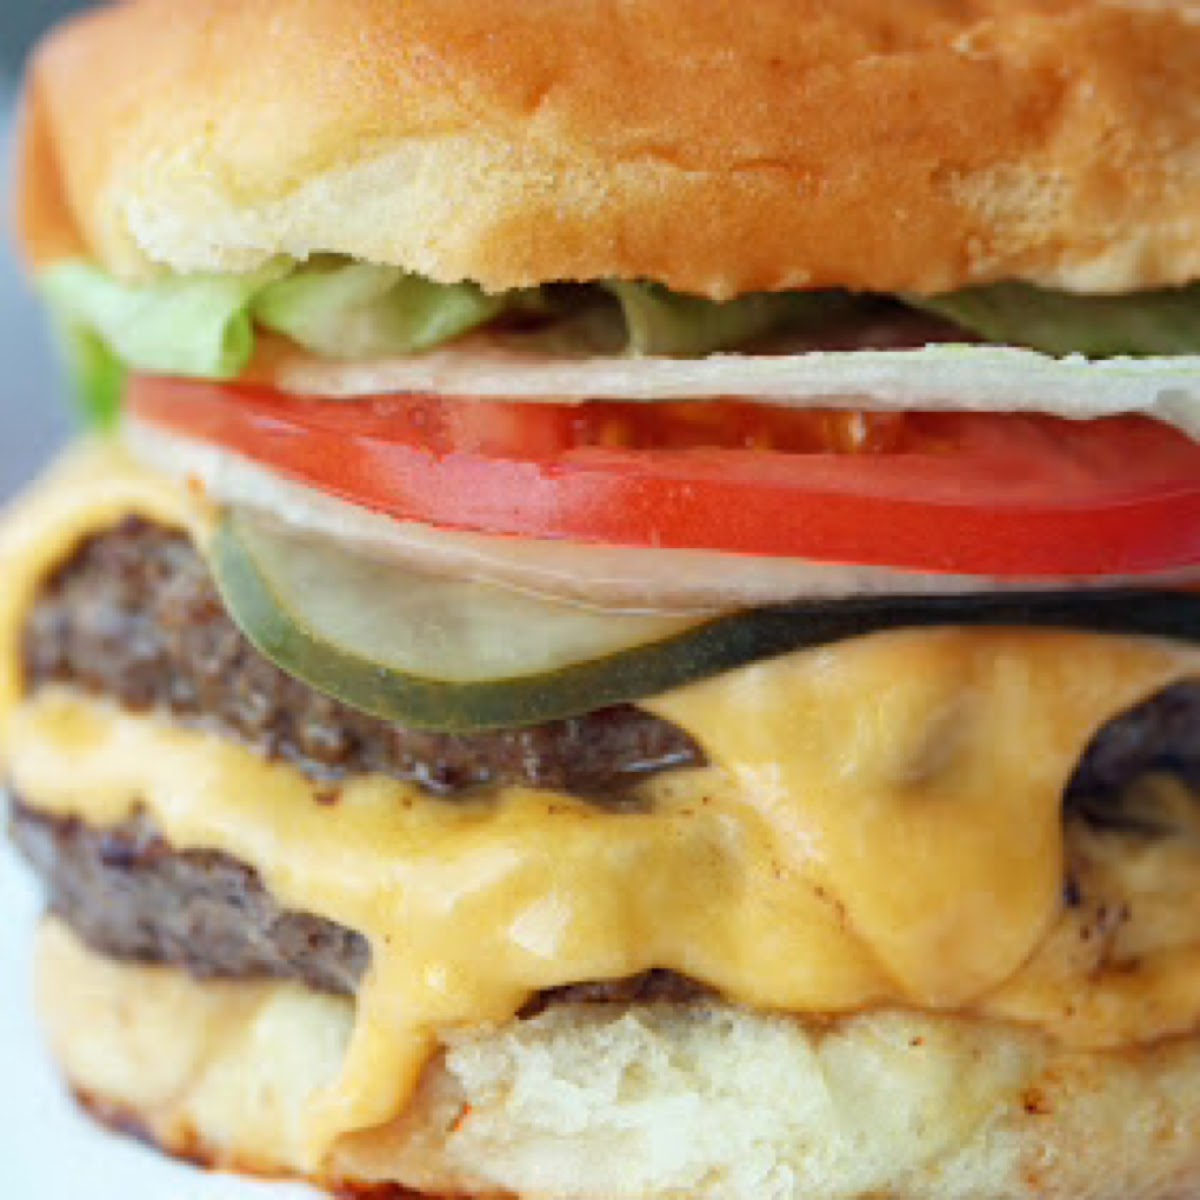 The Burger Garage's double cheeseburger on gluten free bun. (Photo courtesy of BradleyHawks.com)